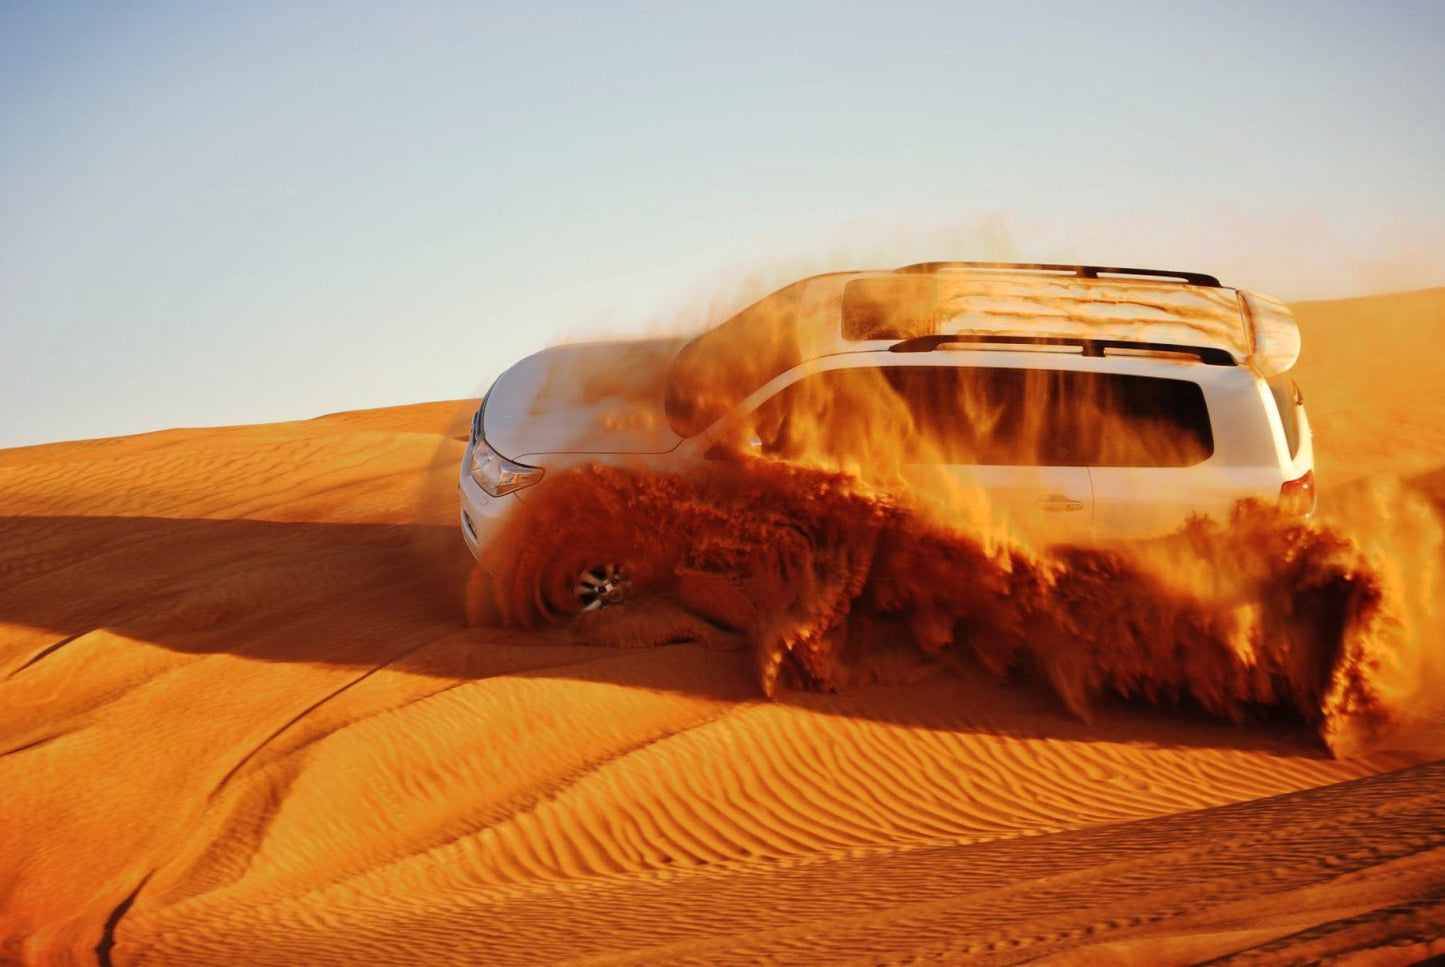 Dubai Overnight Desert Safari, Dune Bashing, Sand Boarding, Camel Riding, with Entertainment BBQ Dinner, Night Camp and Breakfast - Tripventura